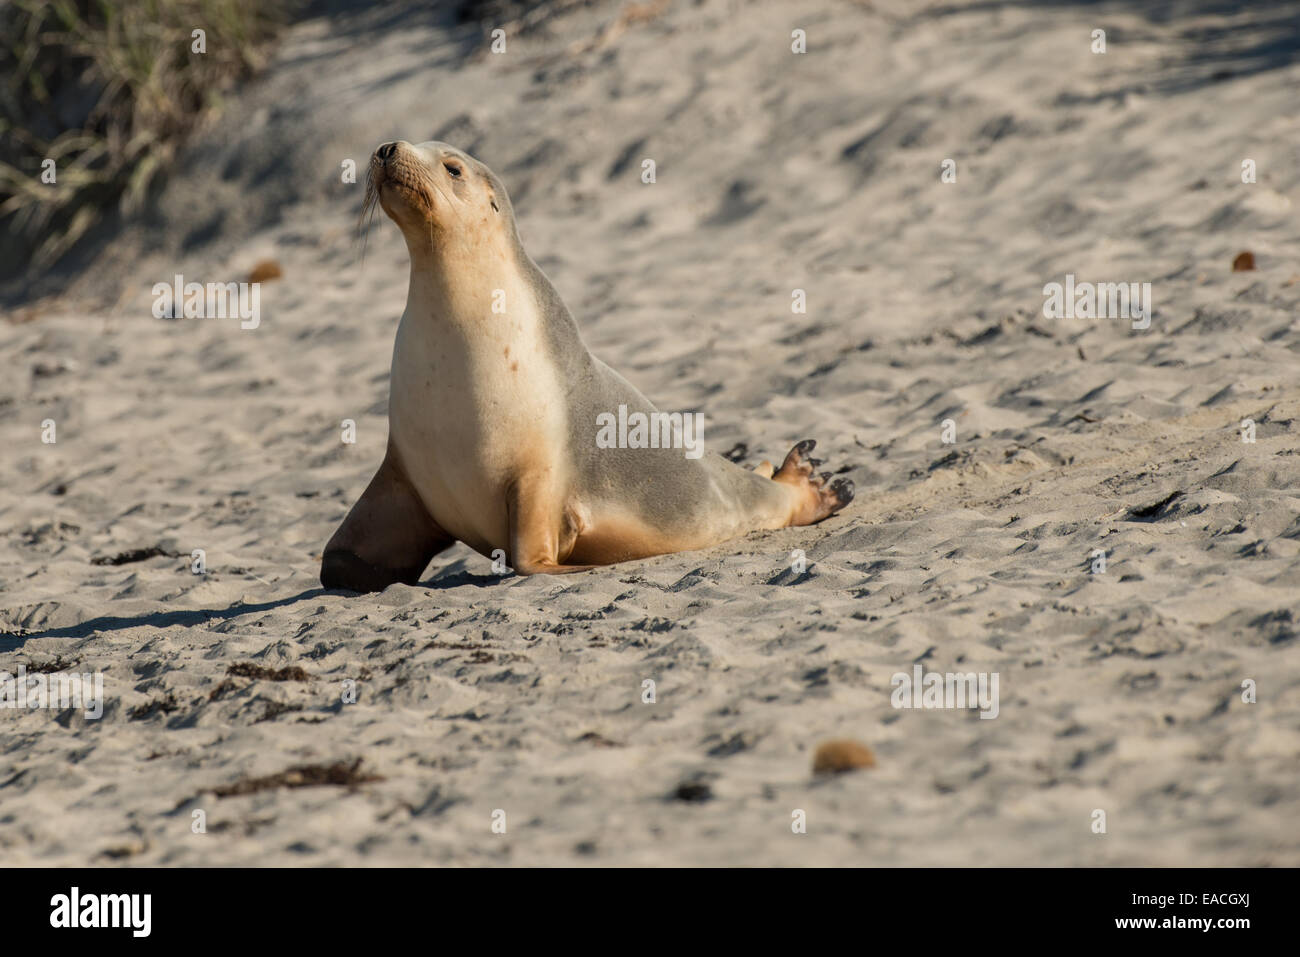 Stock photo of an Australian seal lion with his head raised in the air, Kangaroo Island, Australia. Stock Photo